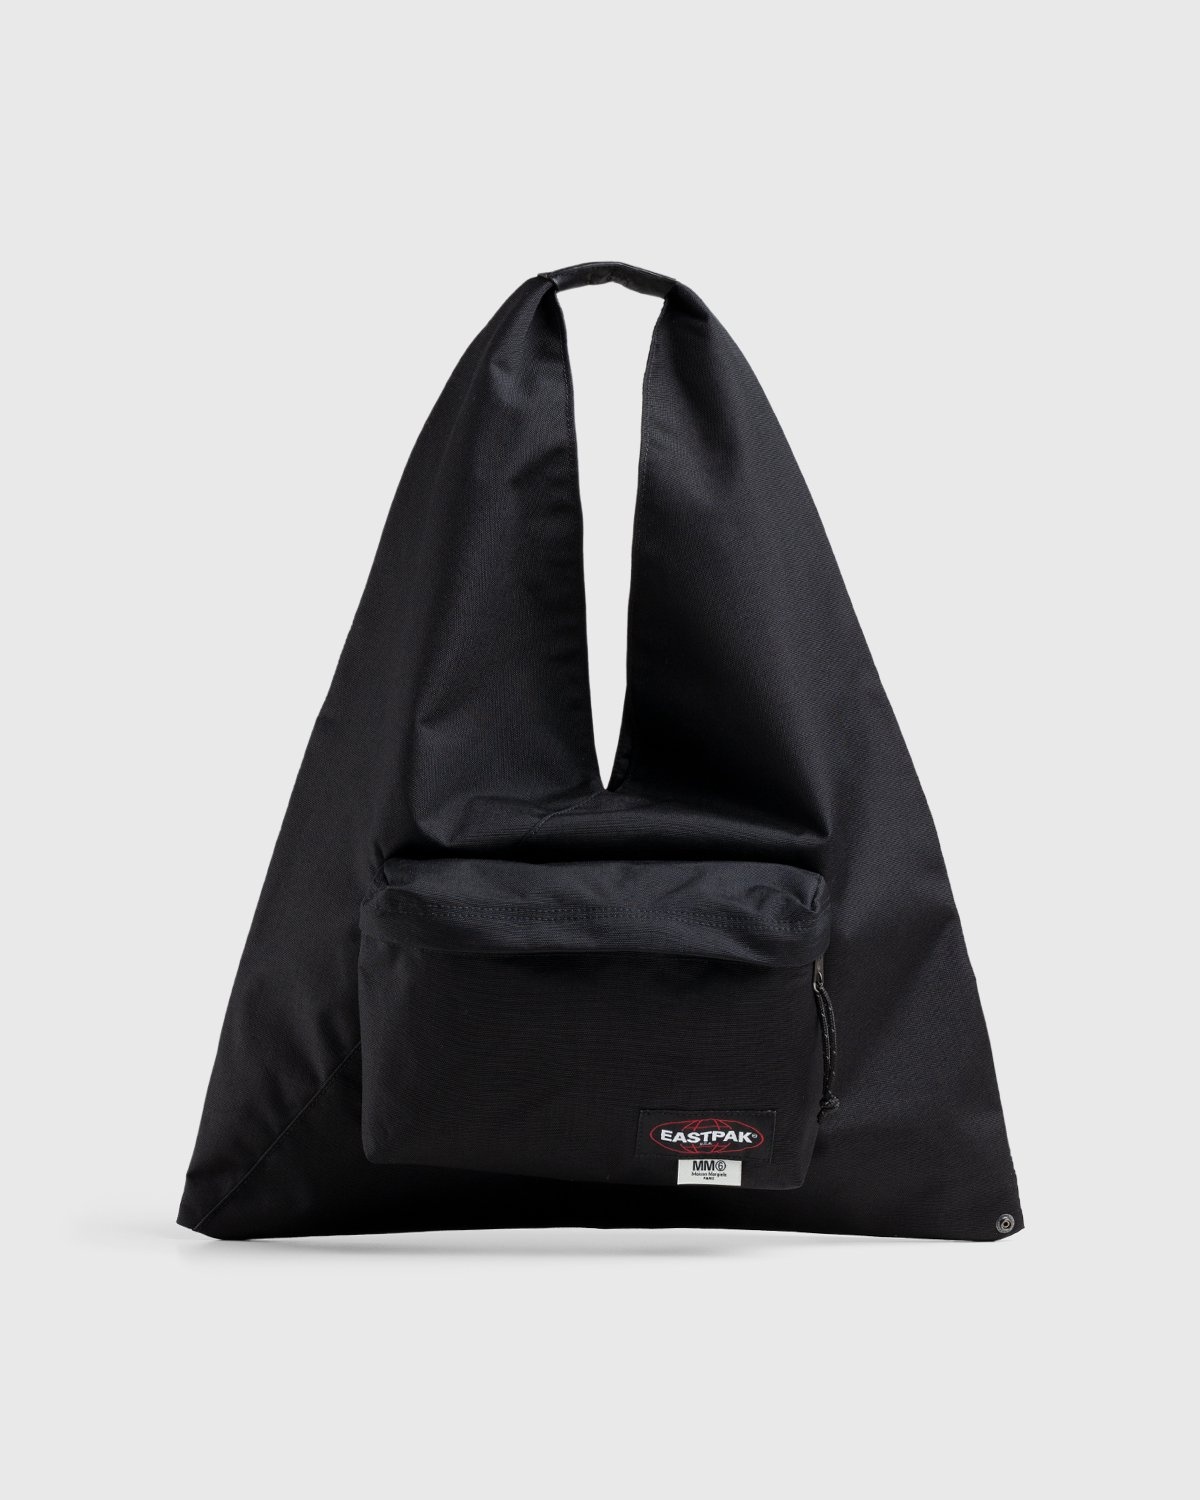 MM6 Maison Margiela x Eastpak – Borsa Shopping Bag Black - Shoulder Bags - Black - Image 1